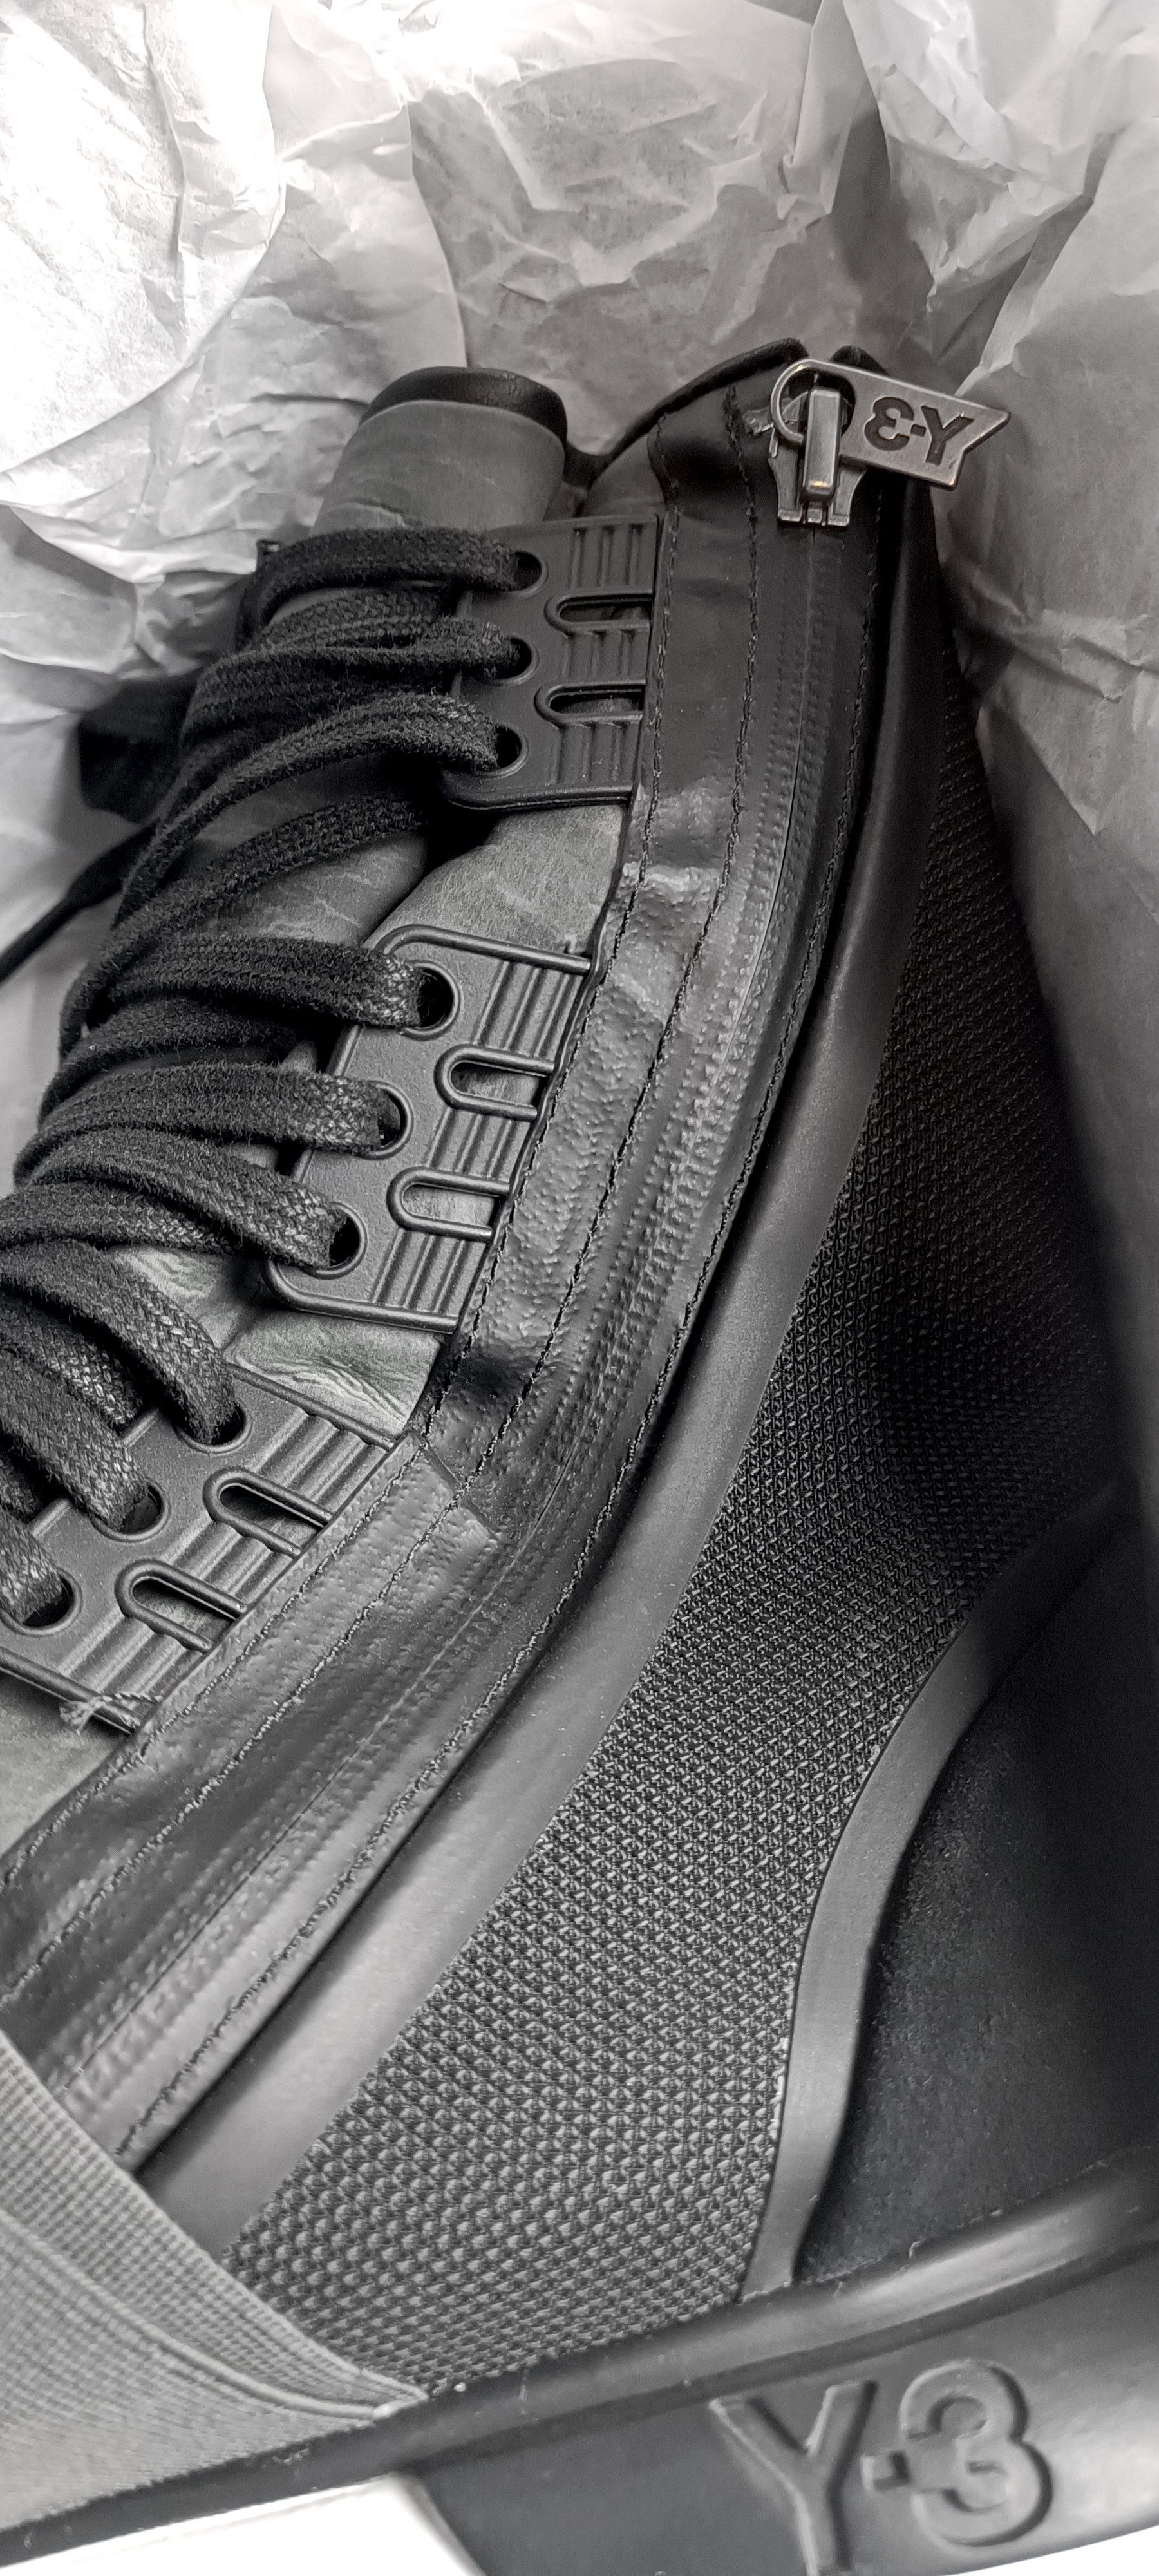 Adidas Y-3 Qasa Boot 'Charcoal Black' - 10